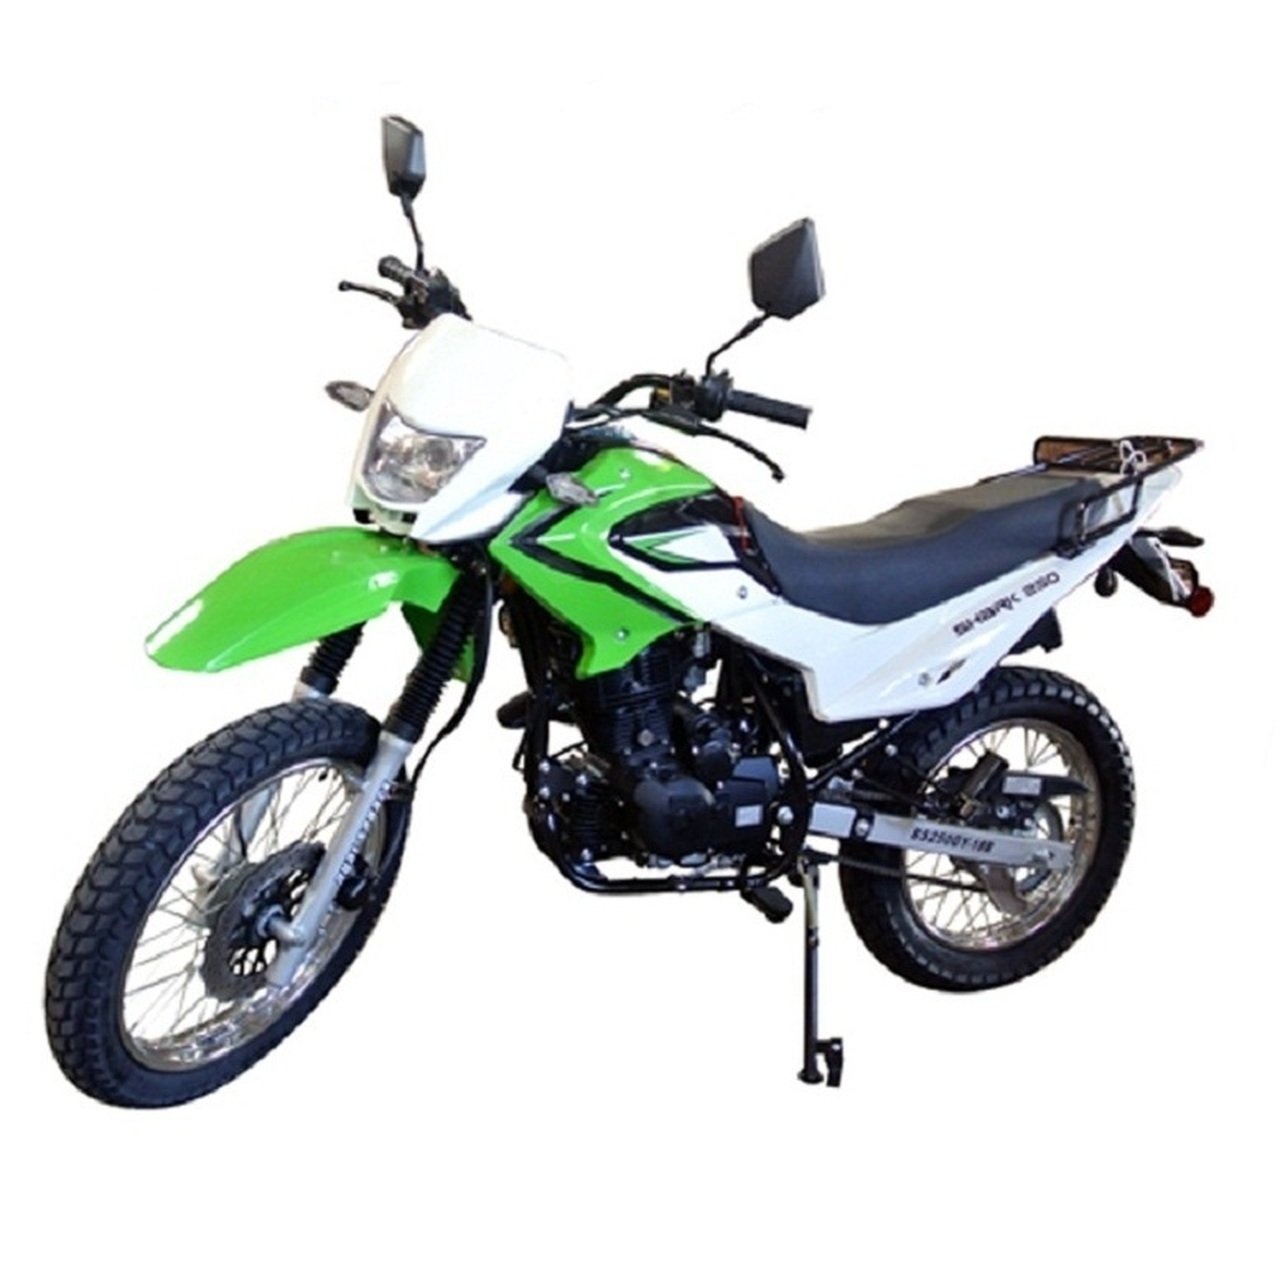 Enduro Street 229cc Legal Dirt Bike 5 Speed Manual w/ Electric/Kick Start Air Cool Engine - Nduro Bike 18B